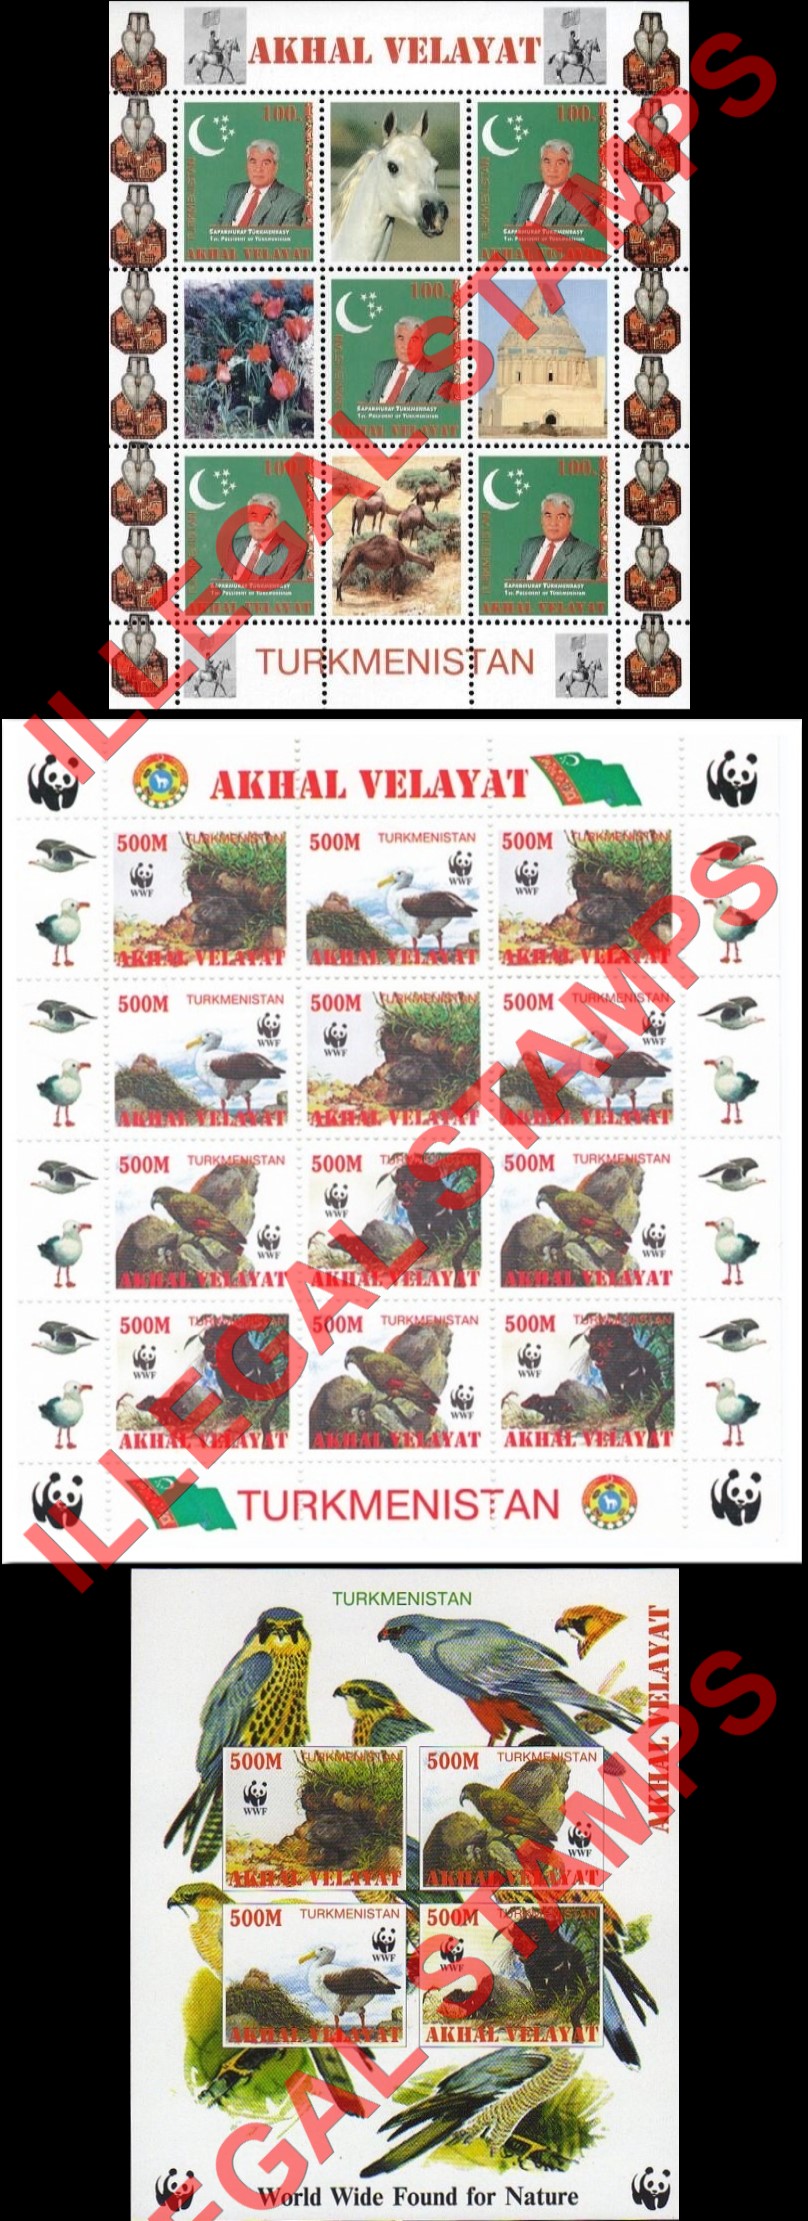 Akhal Velayat 1998 Illegal Stamps